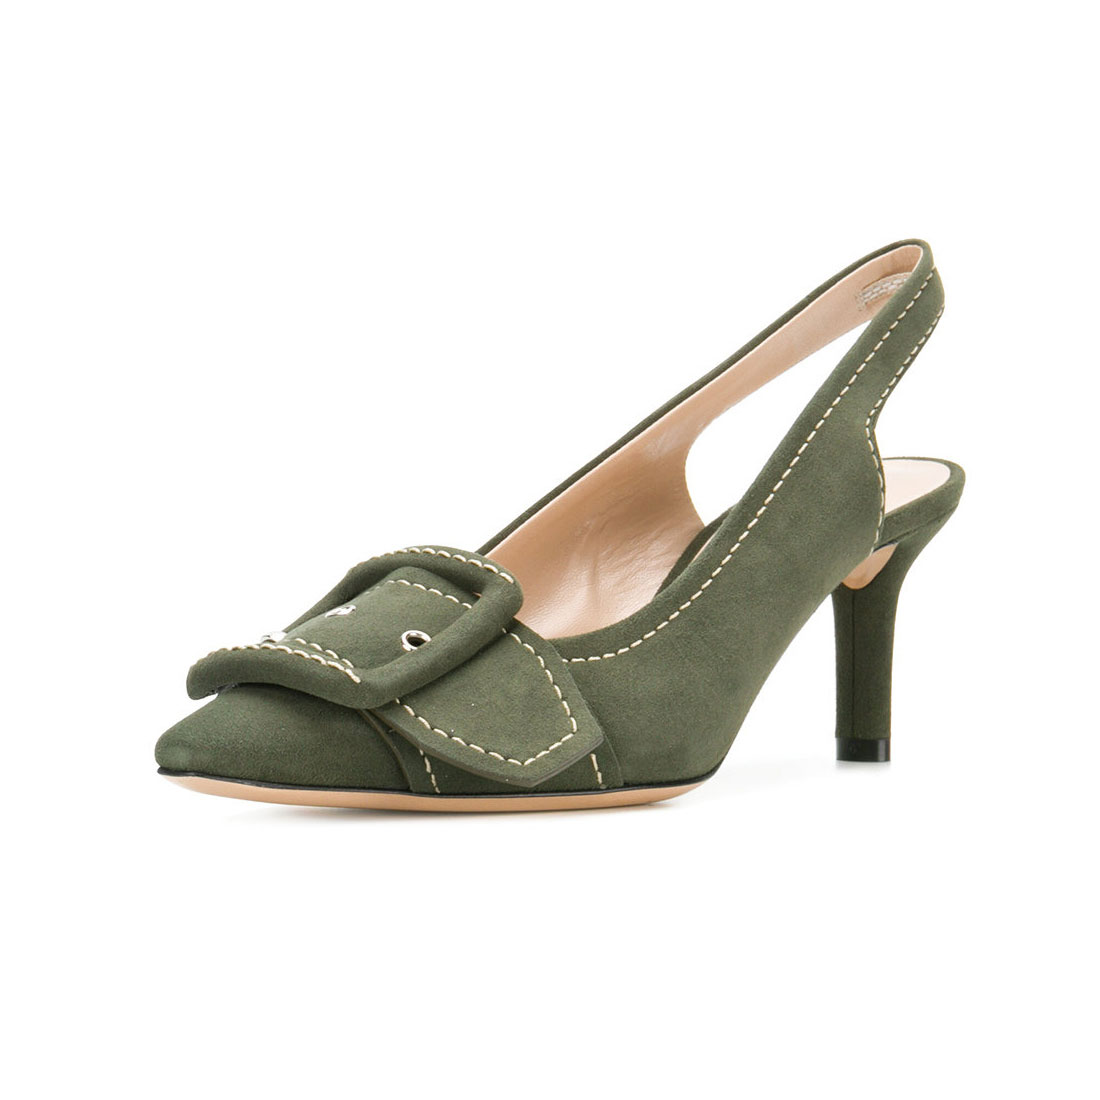 Round toe army green suede upper girls latest high heel sandals HS9004